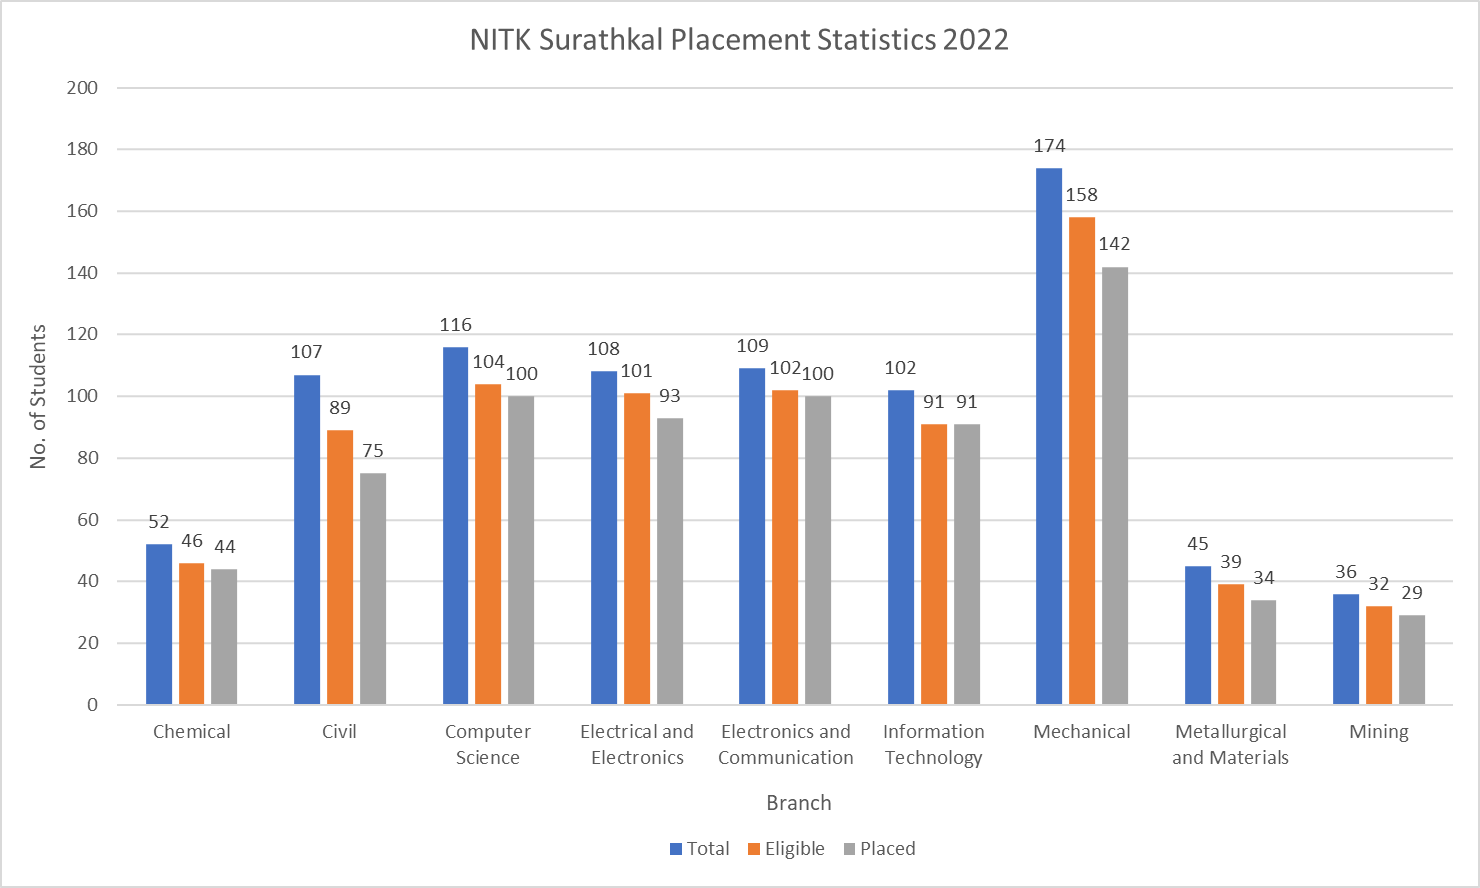 NITK Surathkal Placement Statistics 2022